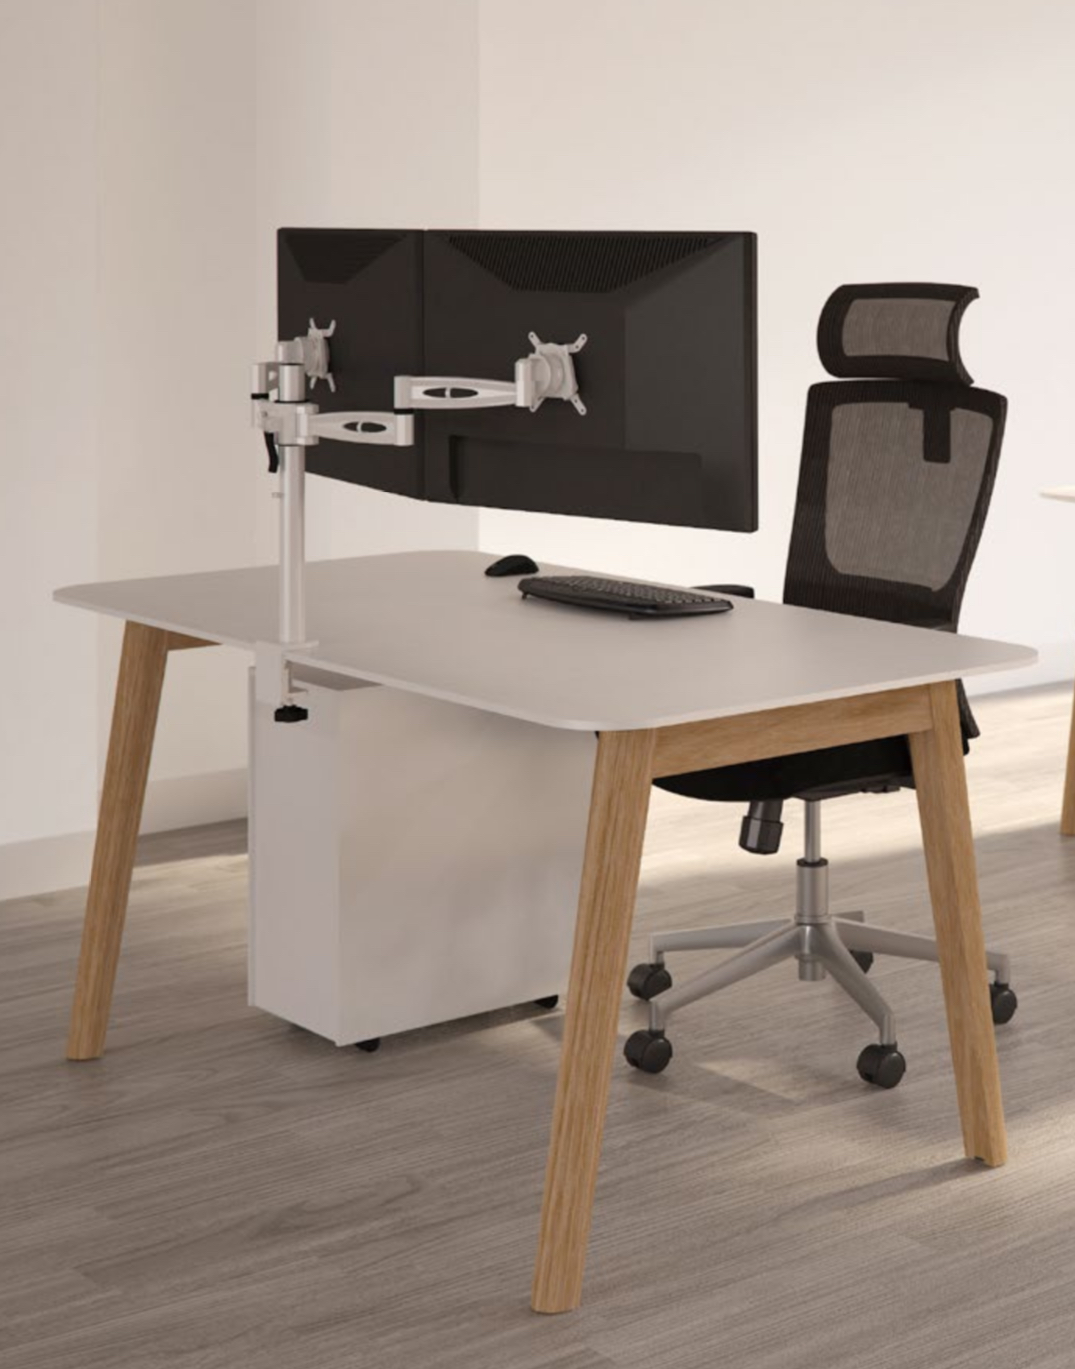 Home Office Desks & Tables